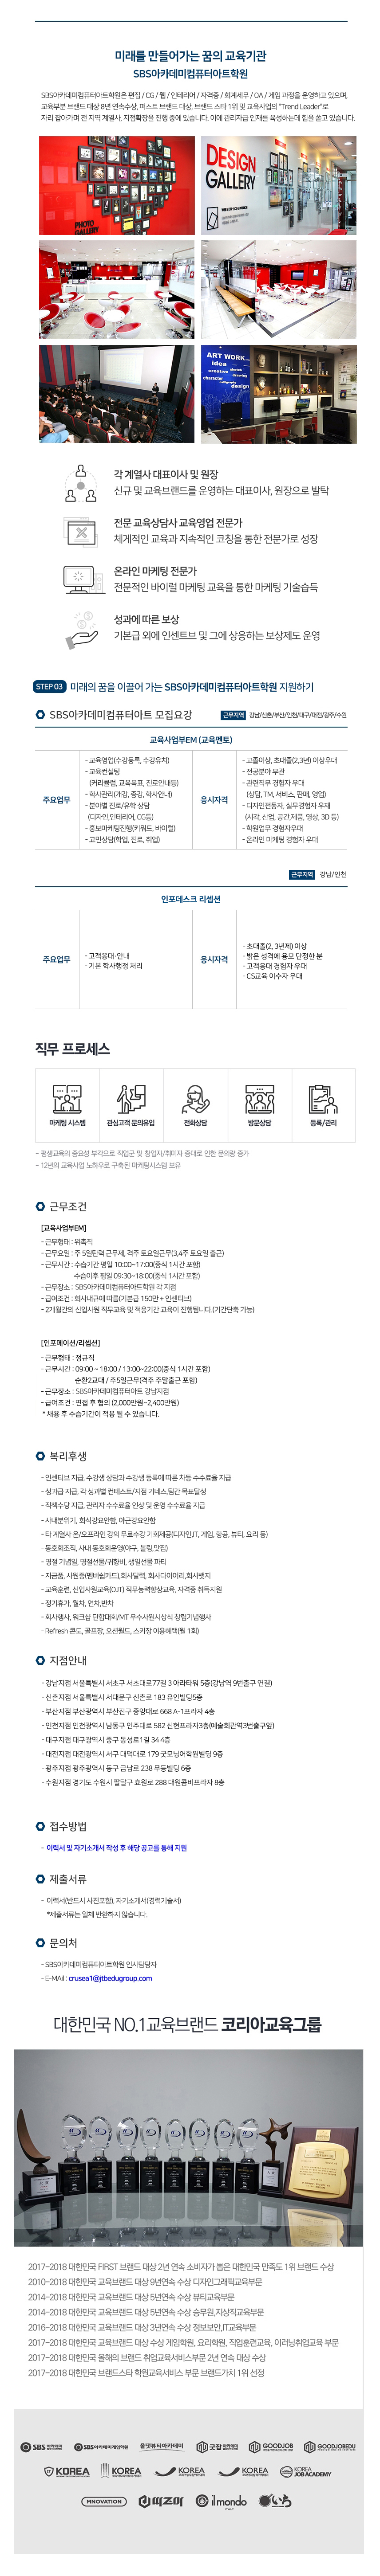 SBS아카데미컴퓨터아트 전지점 부문별 공개채용